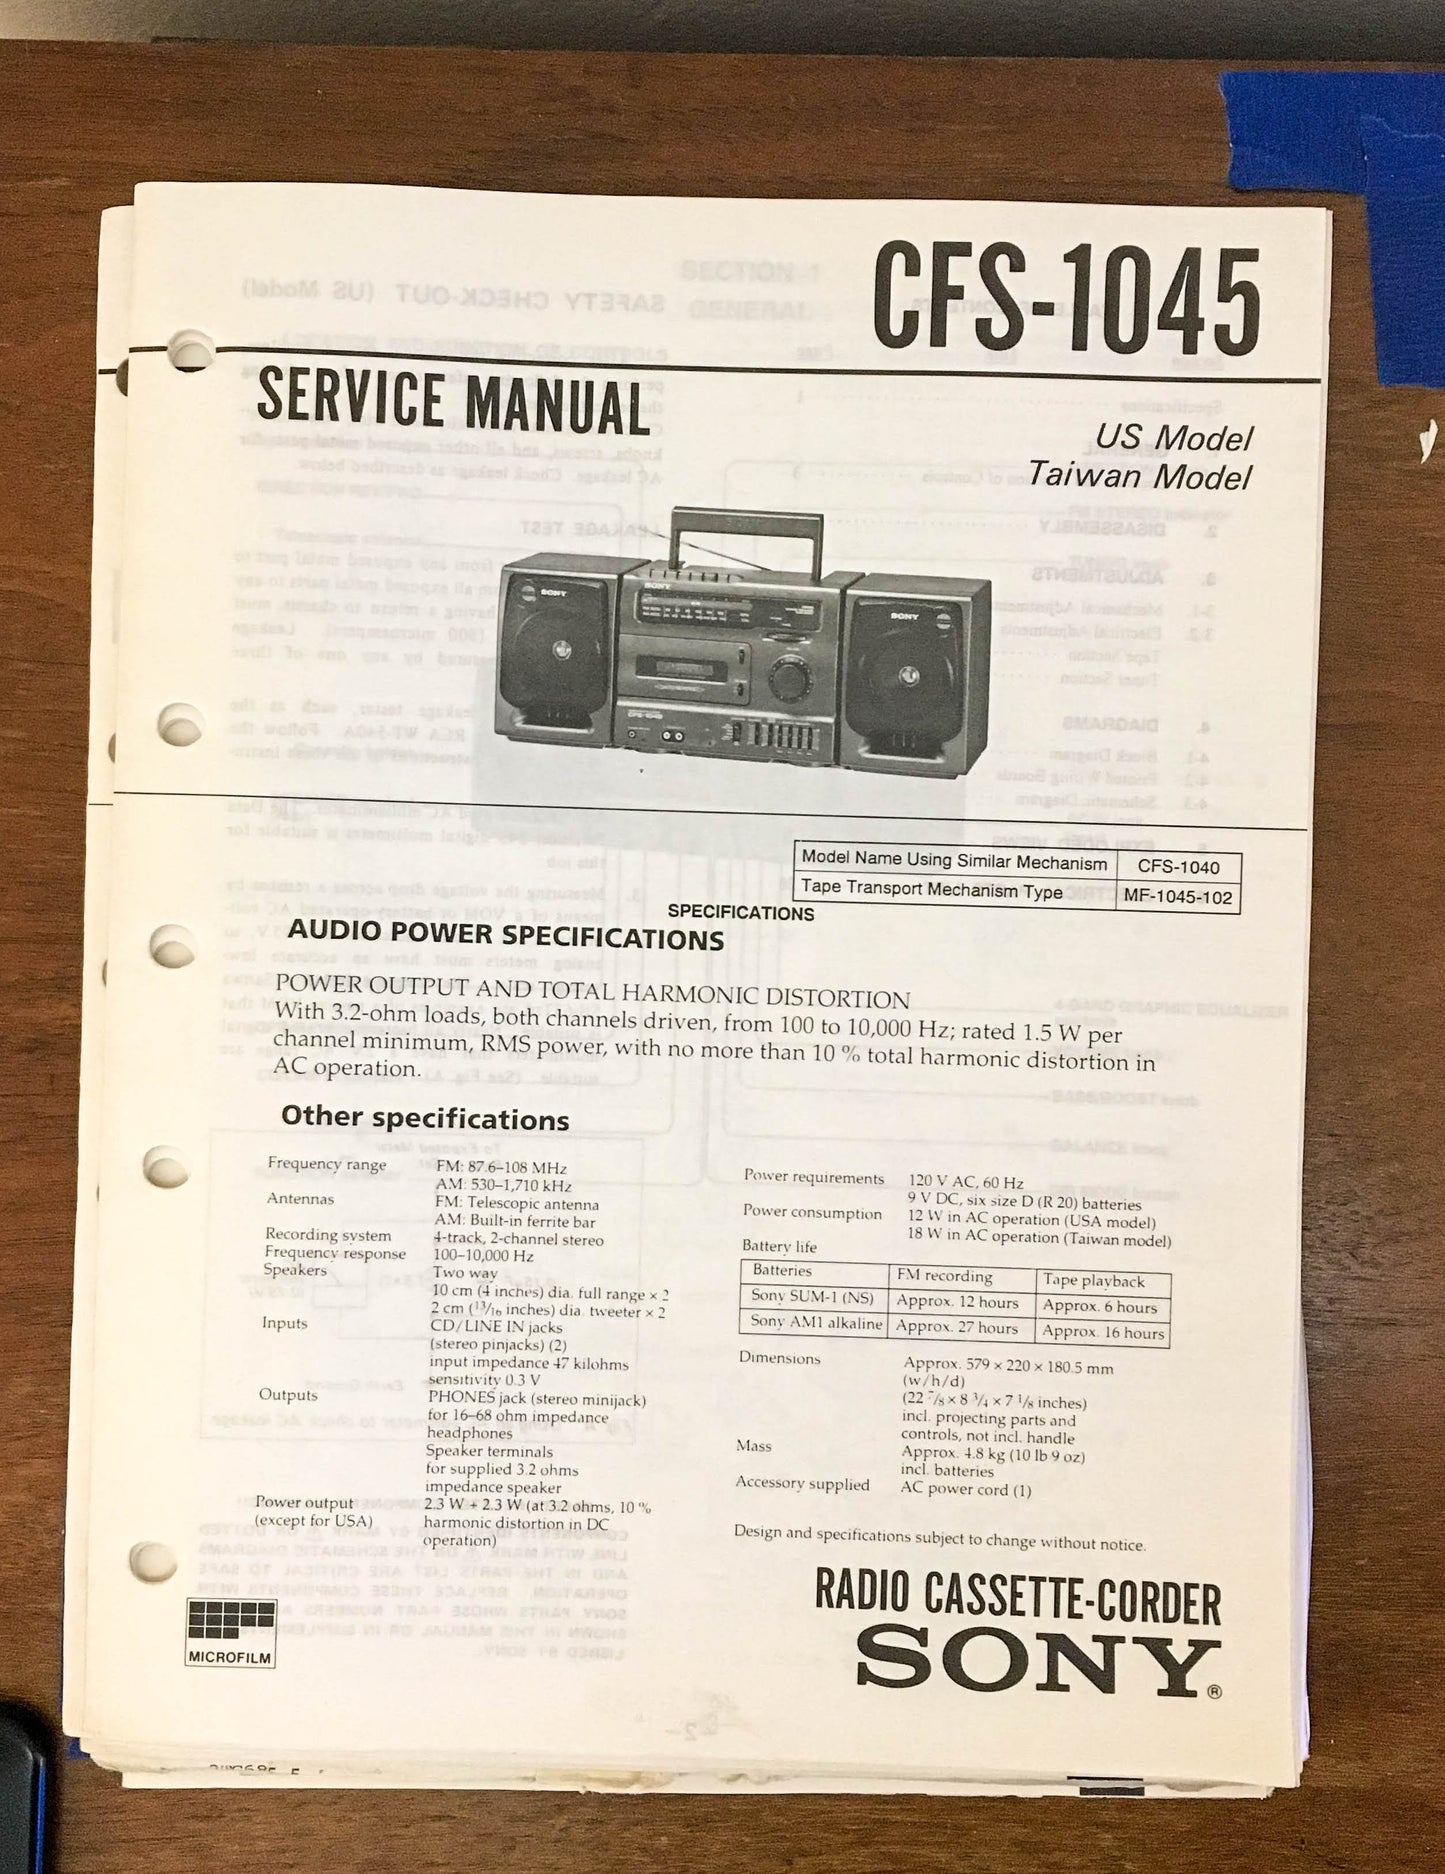 Sony CFS-1045 Radio Cassette Recorder / Boombox Service Manual *Original*